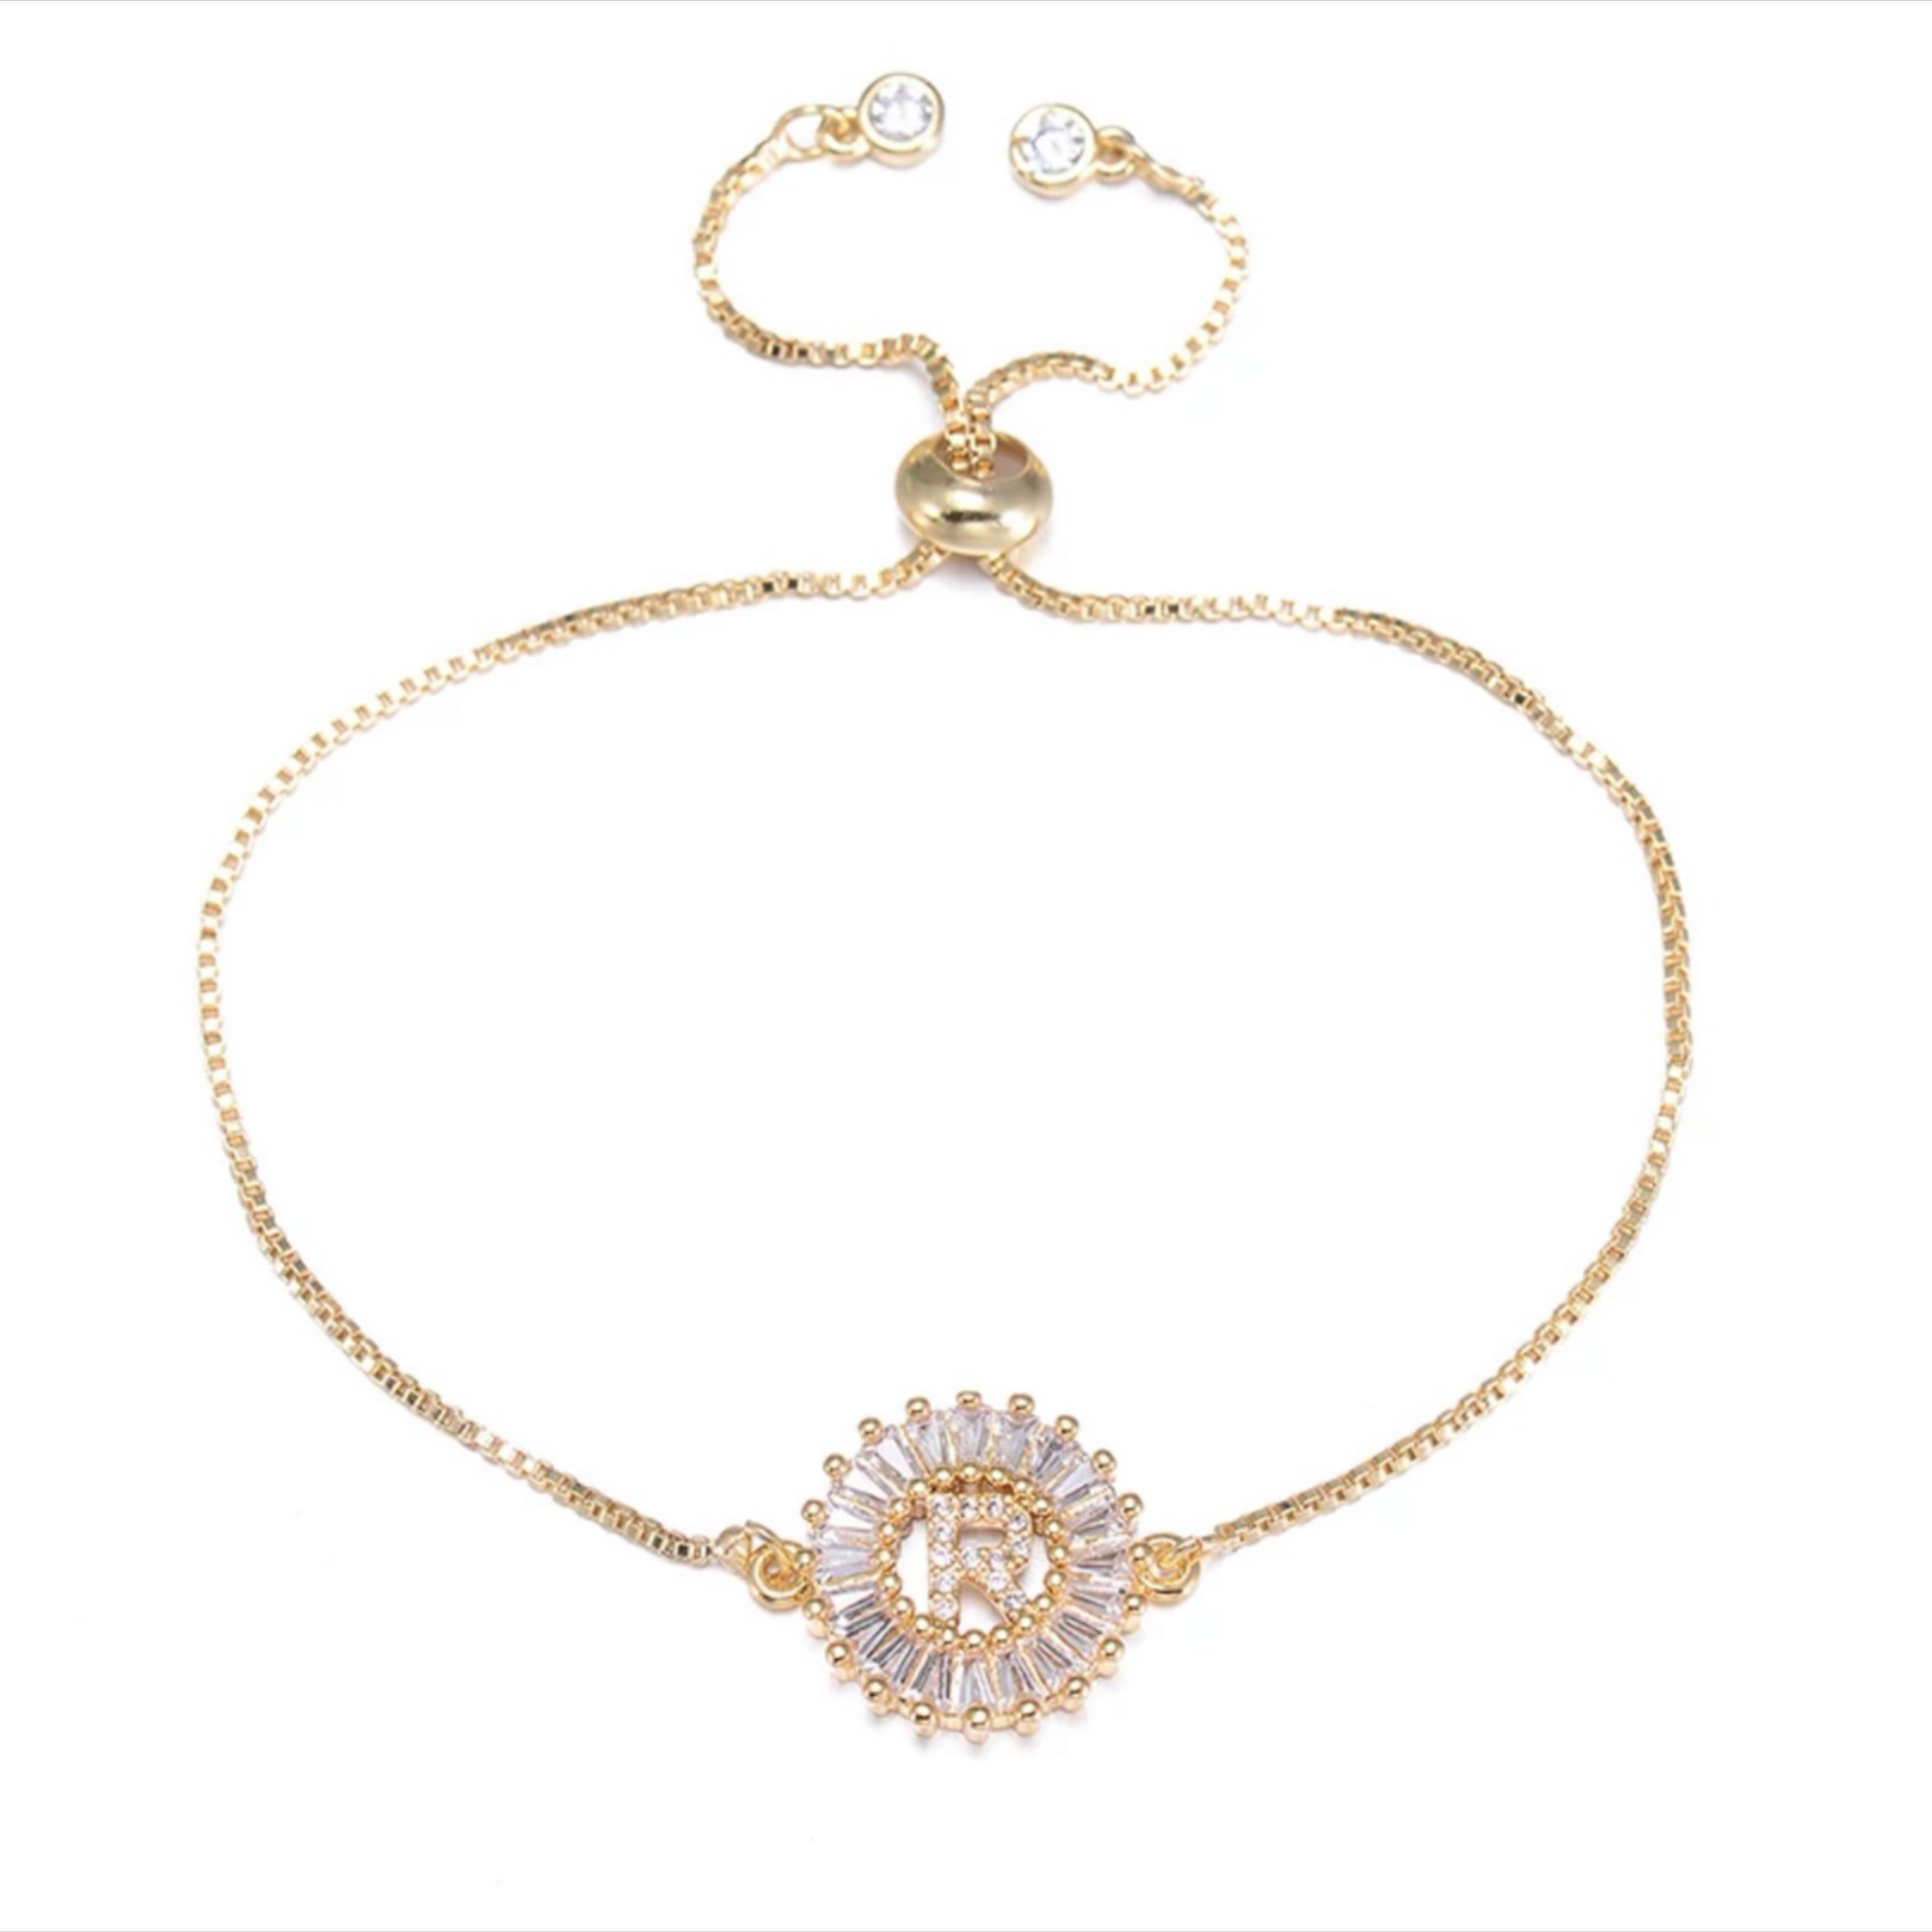 Mandala Letter Bracelet A - Z | 18K GOLD PLATED - Unique Brazilian Jewelry (4364766740555)